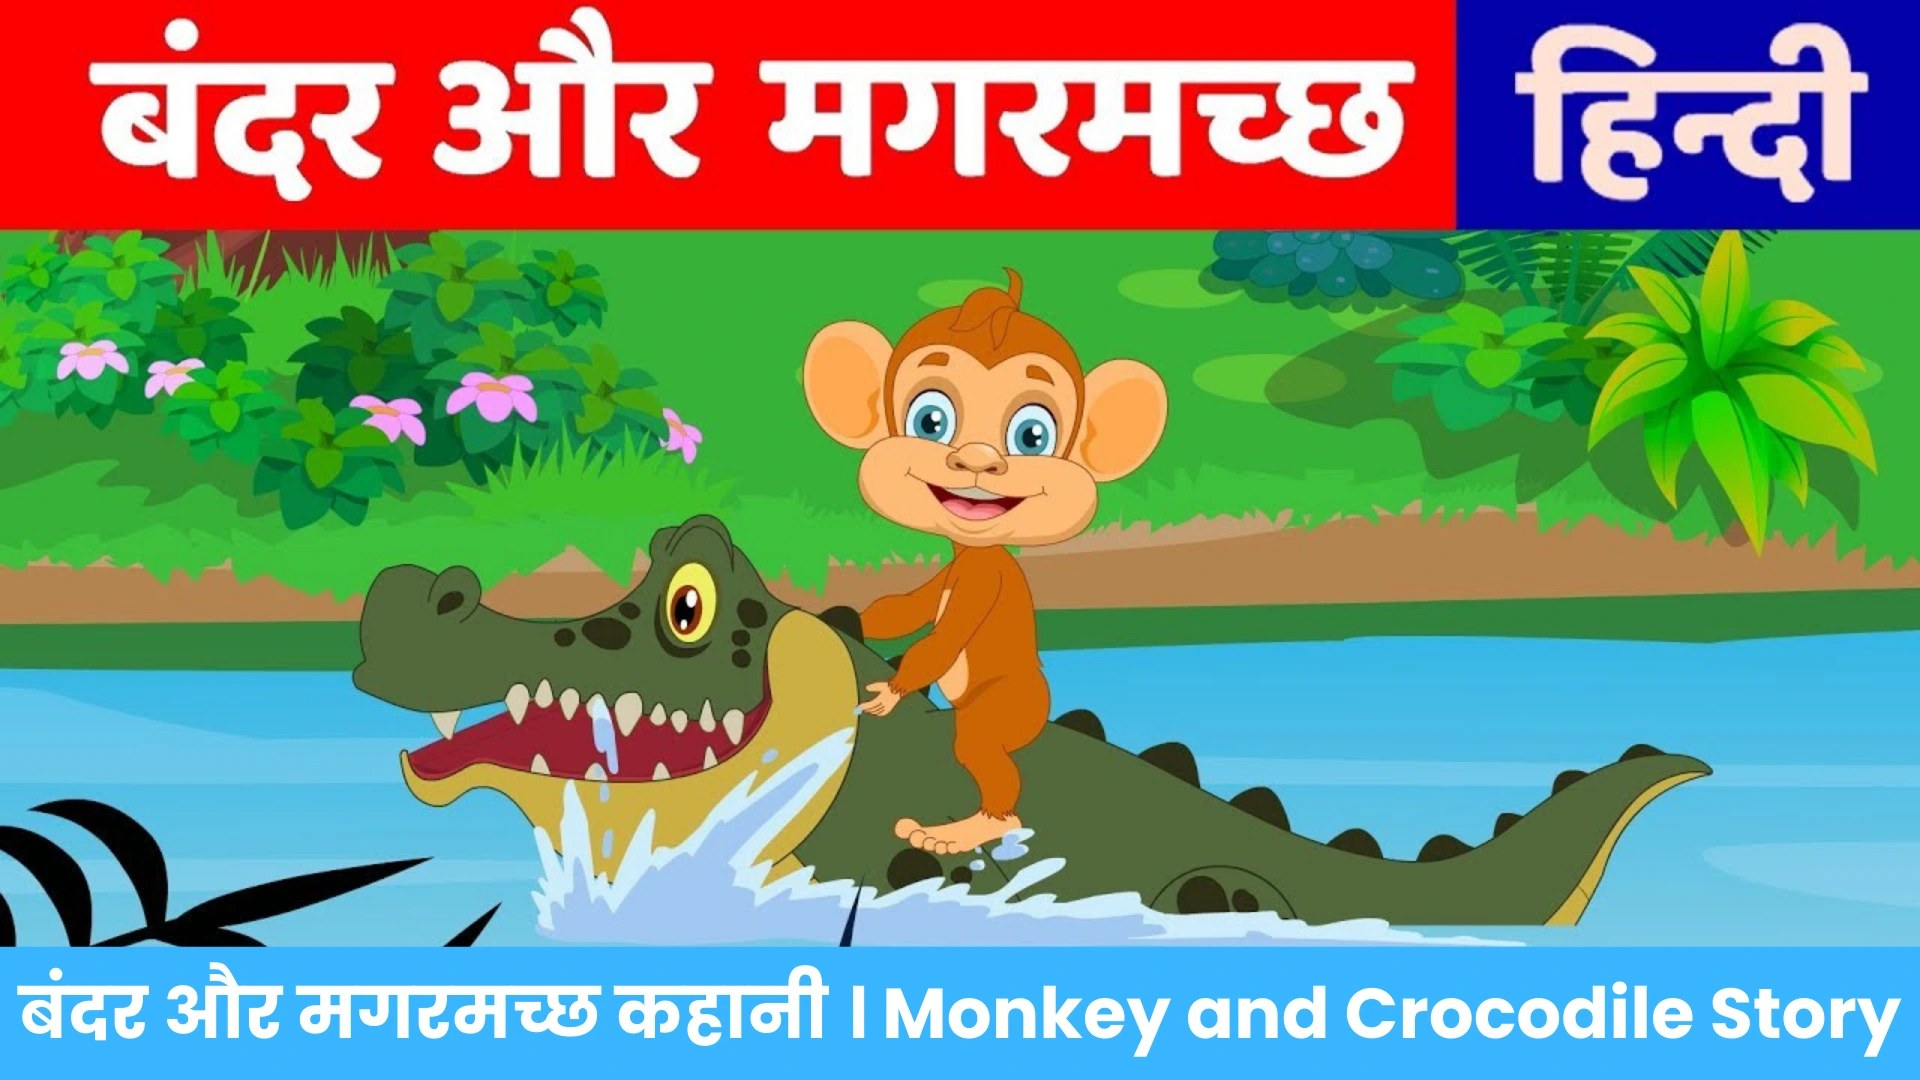 बंदर और मगरमच्छ की कहानी । Monkey and Crocodile Story in Hindi